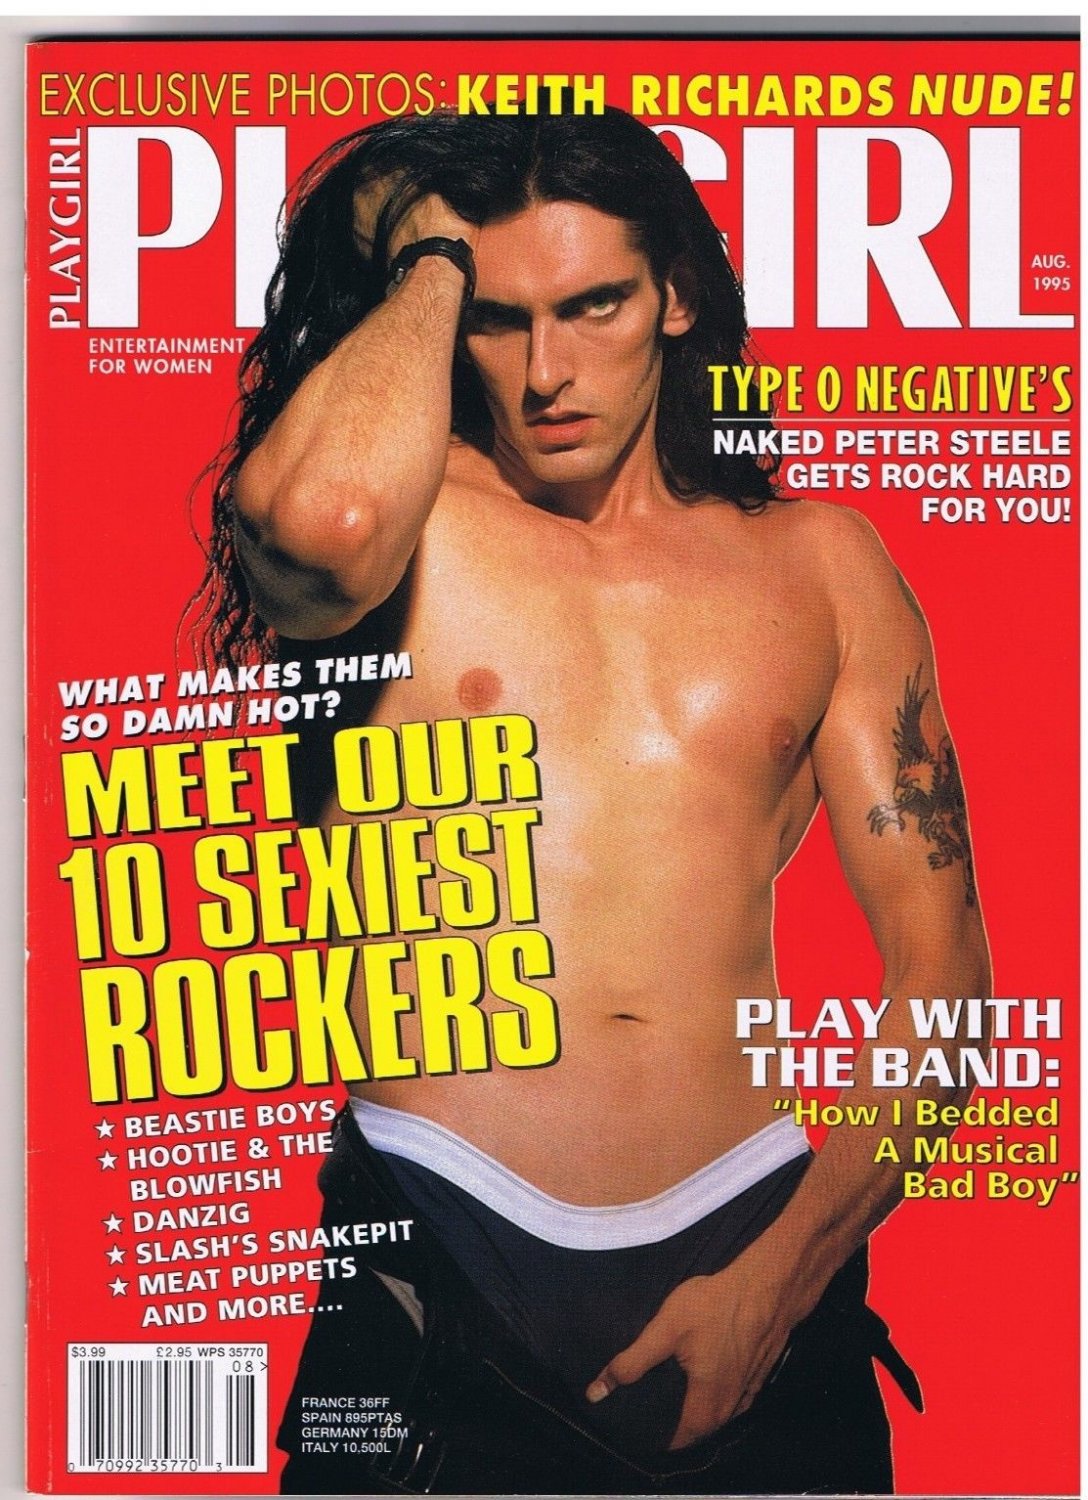 Playgirl Magazine Peter Steele Type O Negative Nude Keith Richards Nude! 